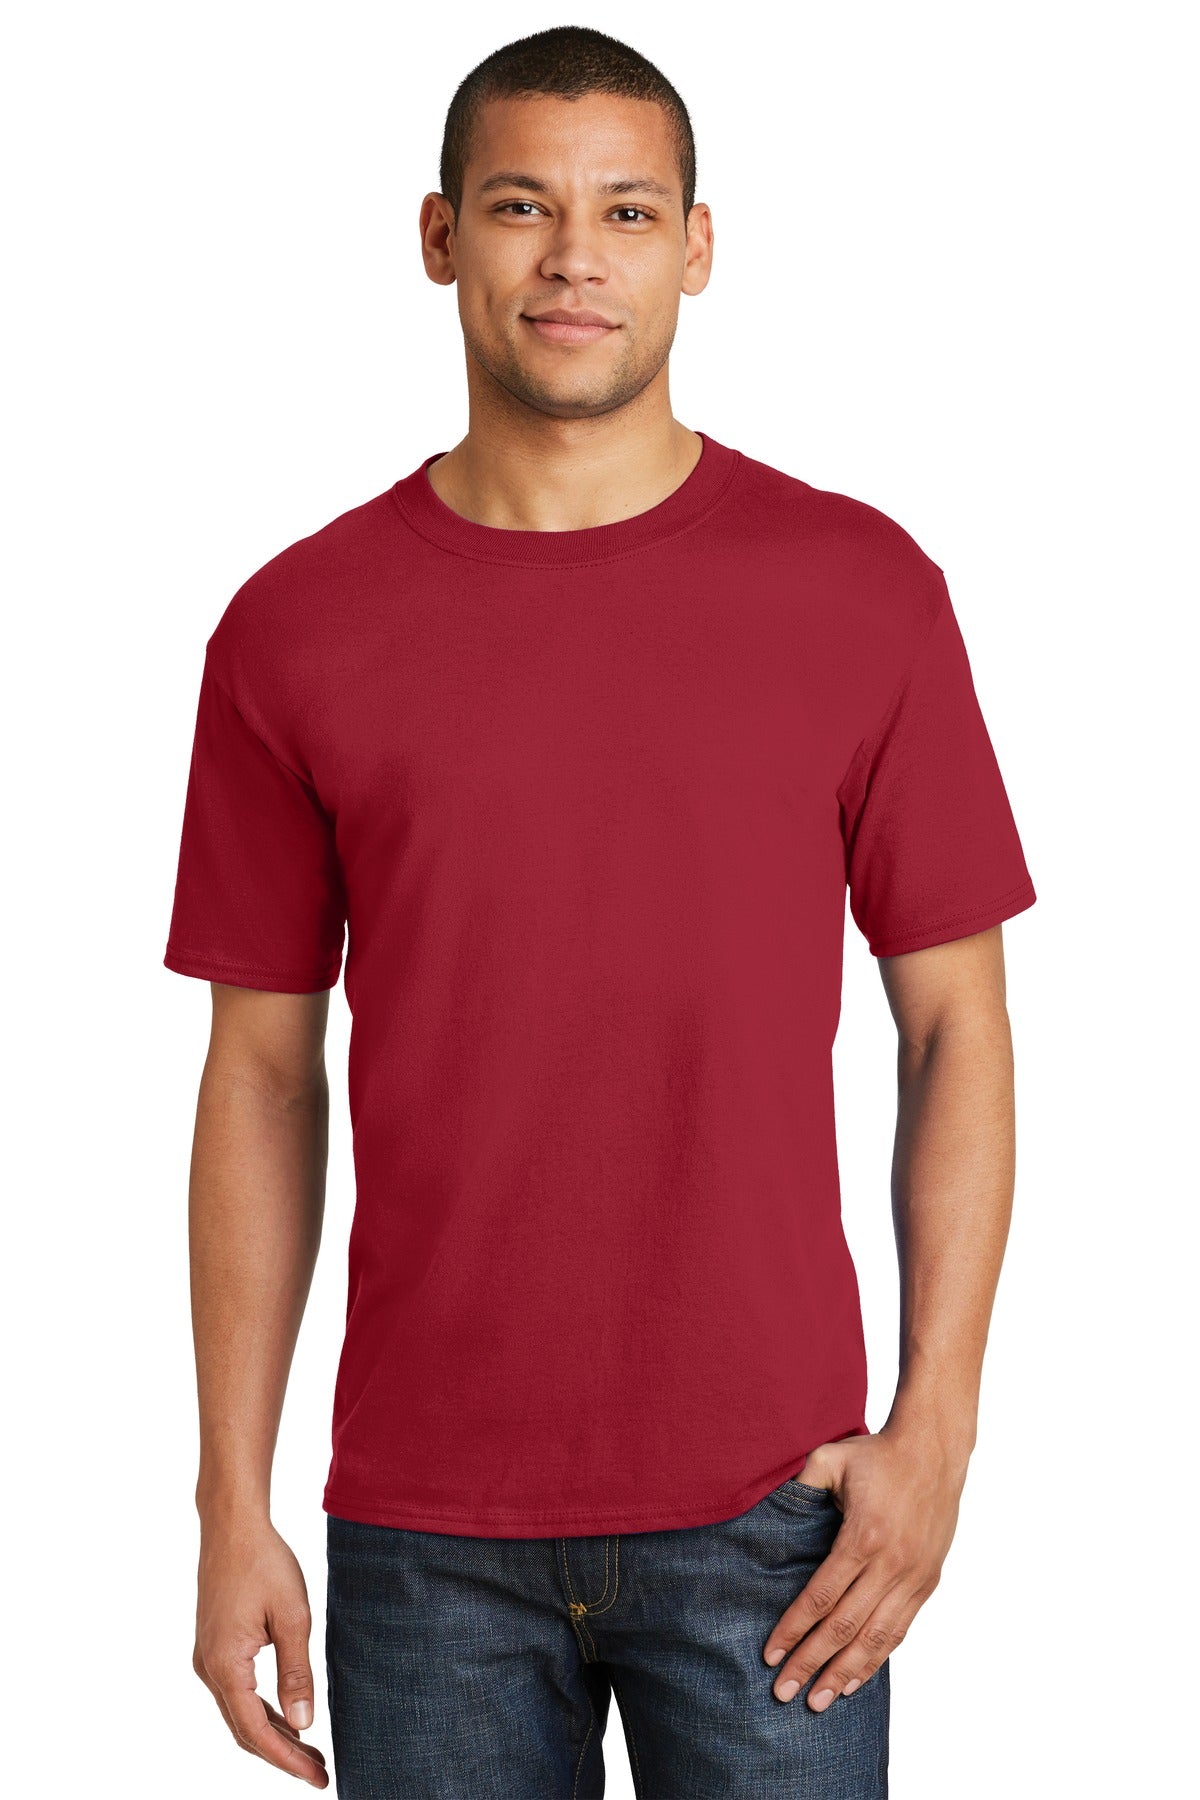 Honey Dew Melanin Unisex T-Shirt Red XL